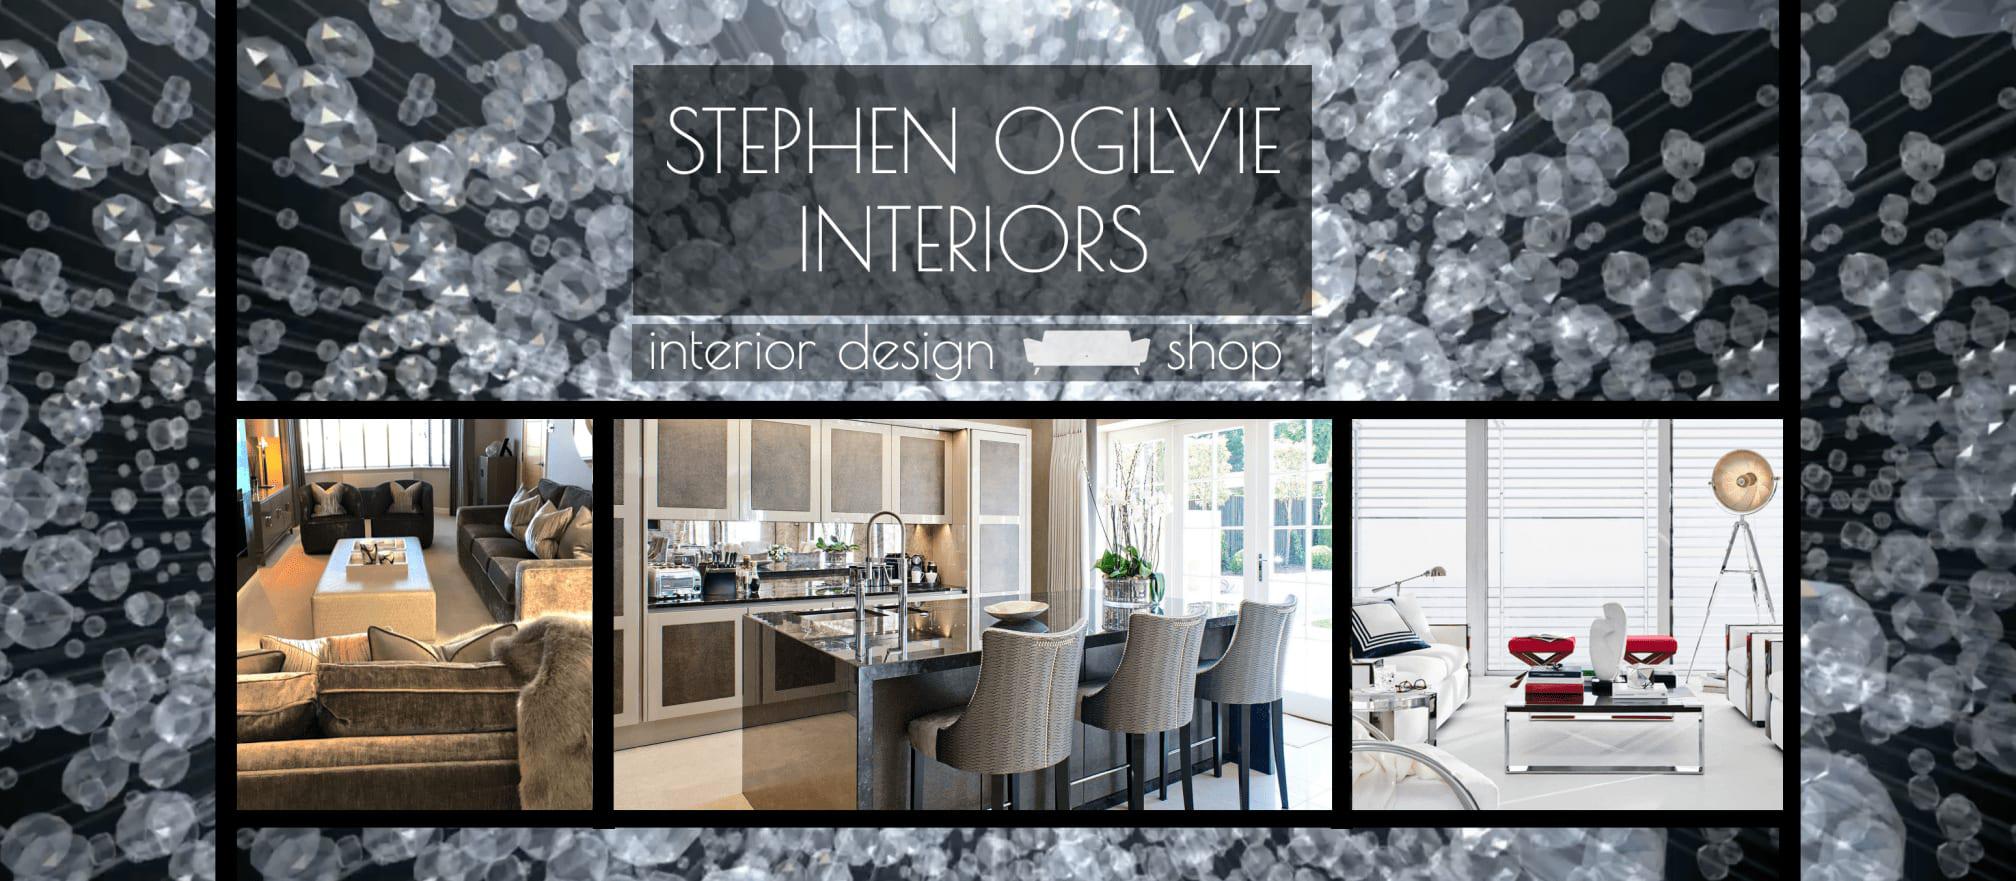 Stephen Ogilvie Interiors Ltd Aberdeen 07960 735275